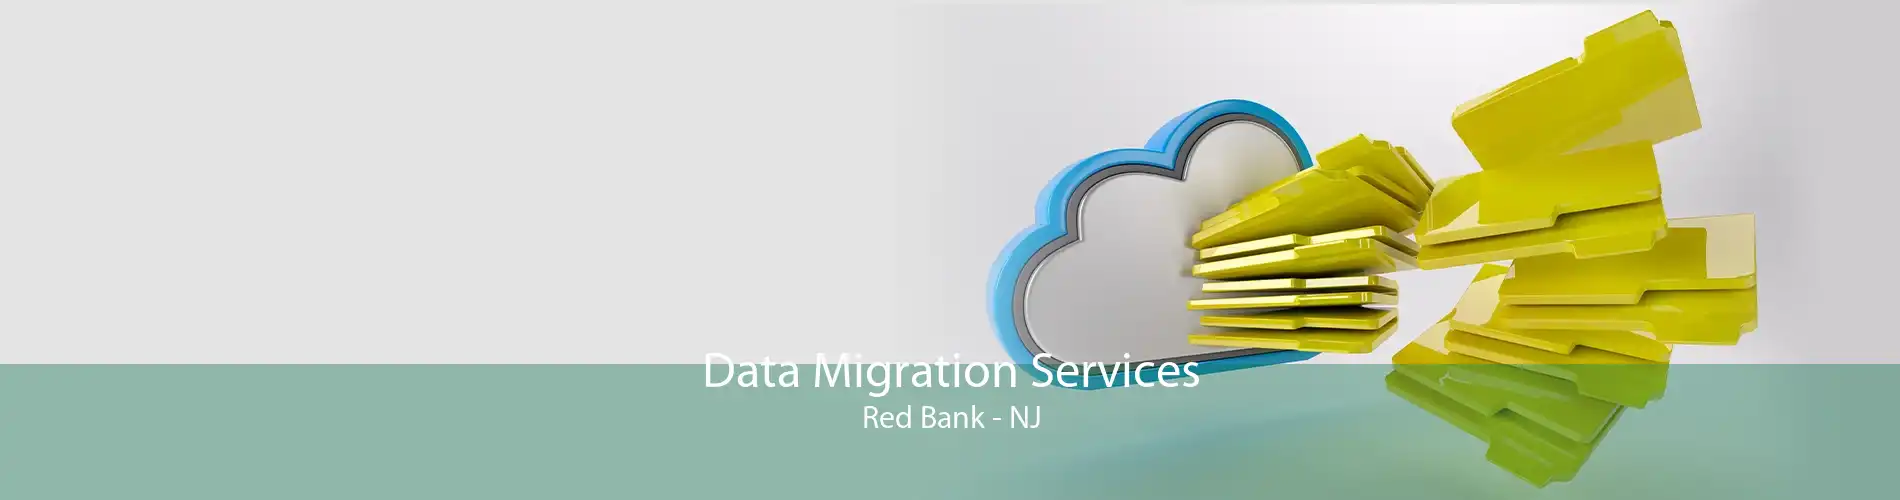 Data Migration Services Red Bank - NJ